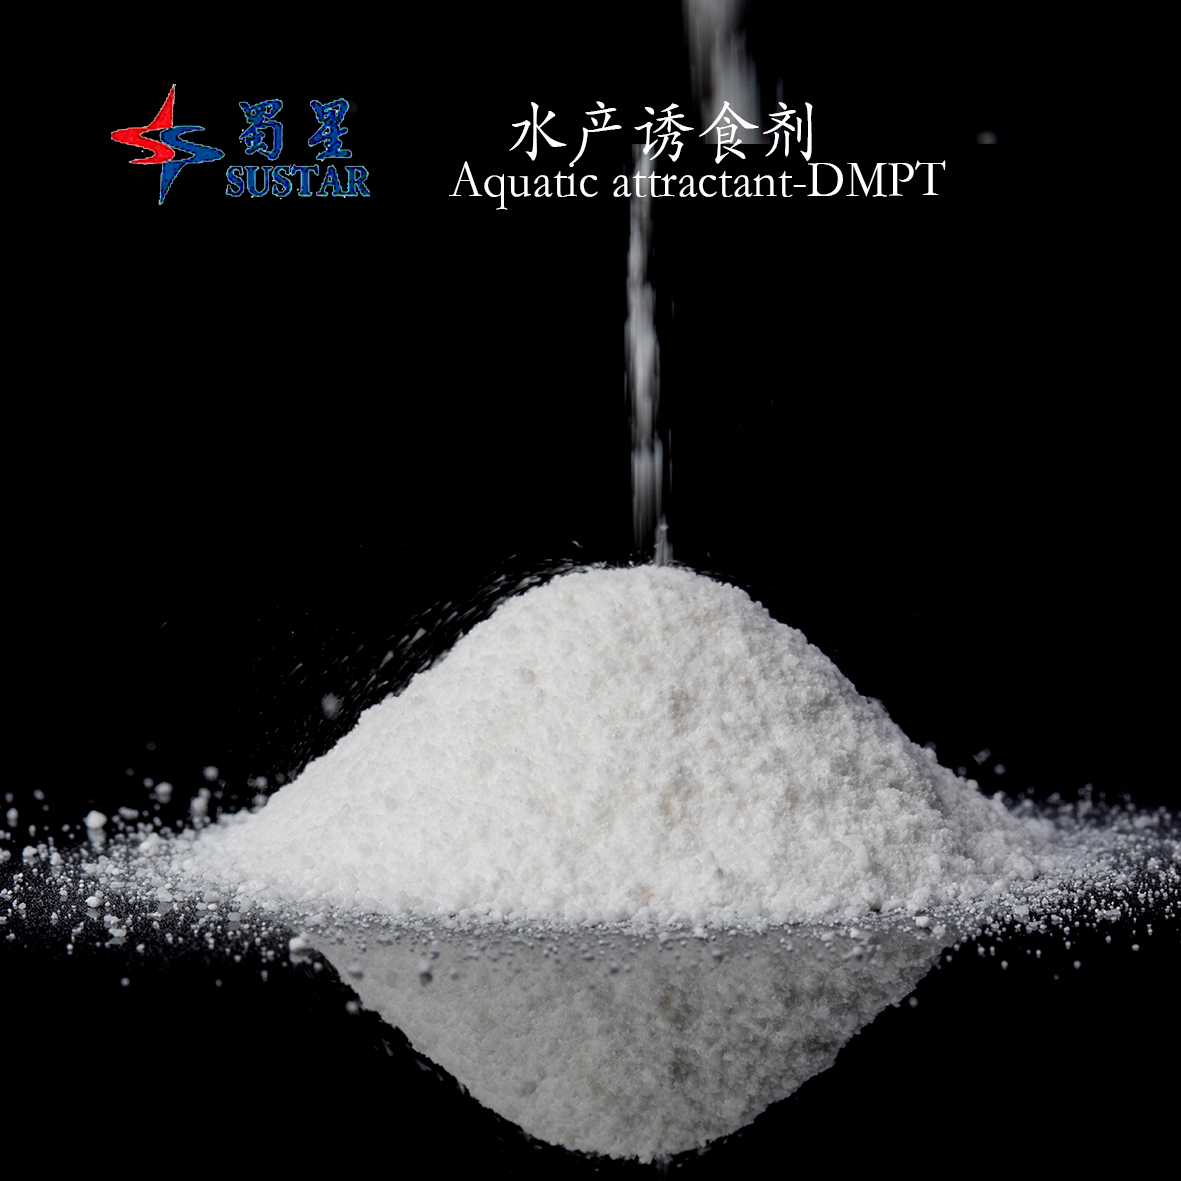 DMPT Dimethyl-Beta-Propiothetin Aquapro Aquatic Attractant (2-Carboxyethyl) dimethylsulfonium chloride s,s-Dimethyl-β-propionic acid thetine White Crystalline Powder